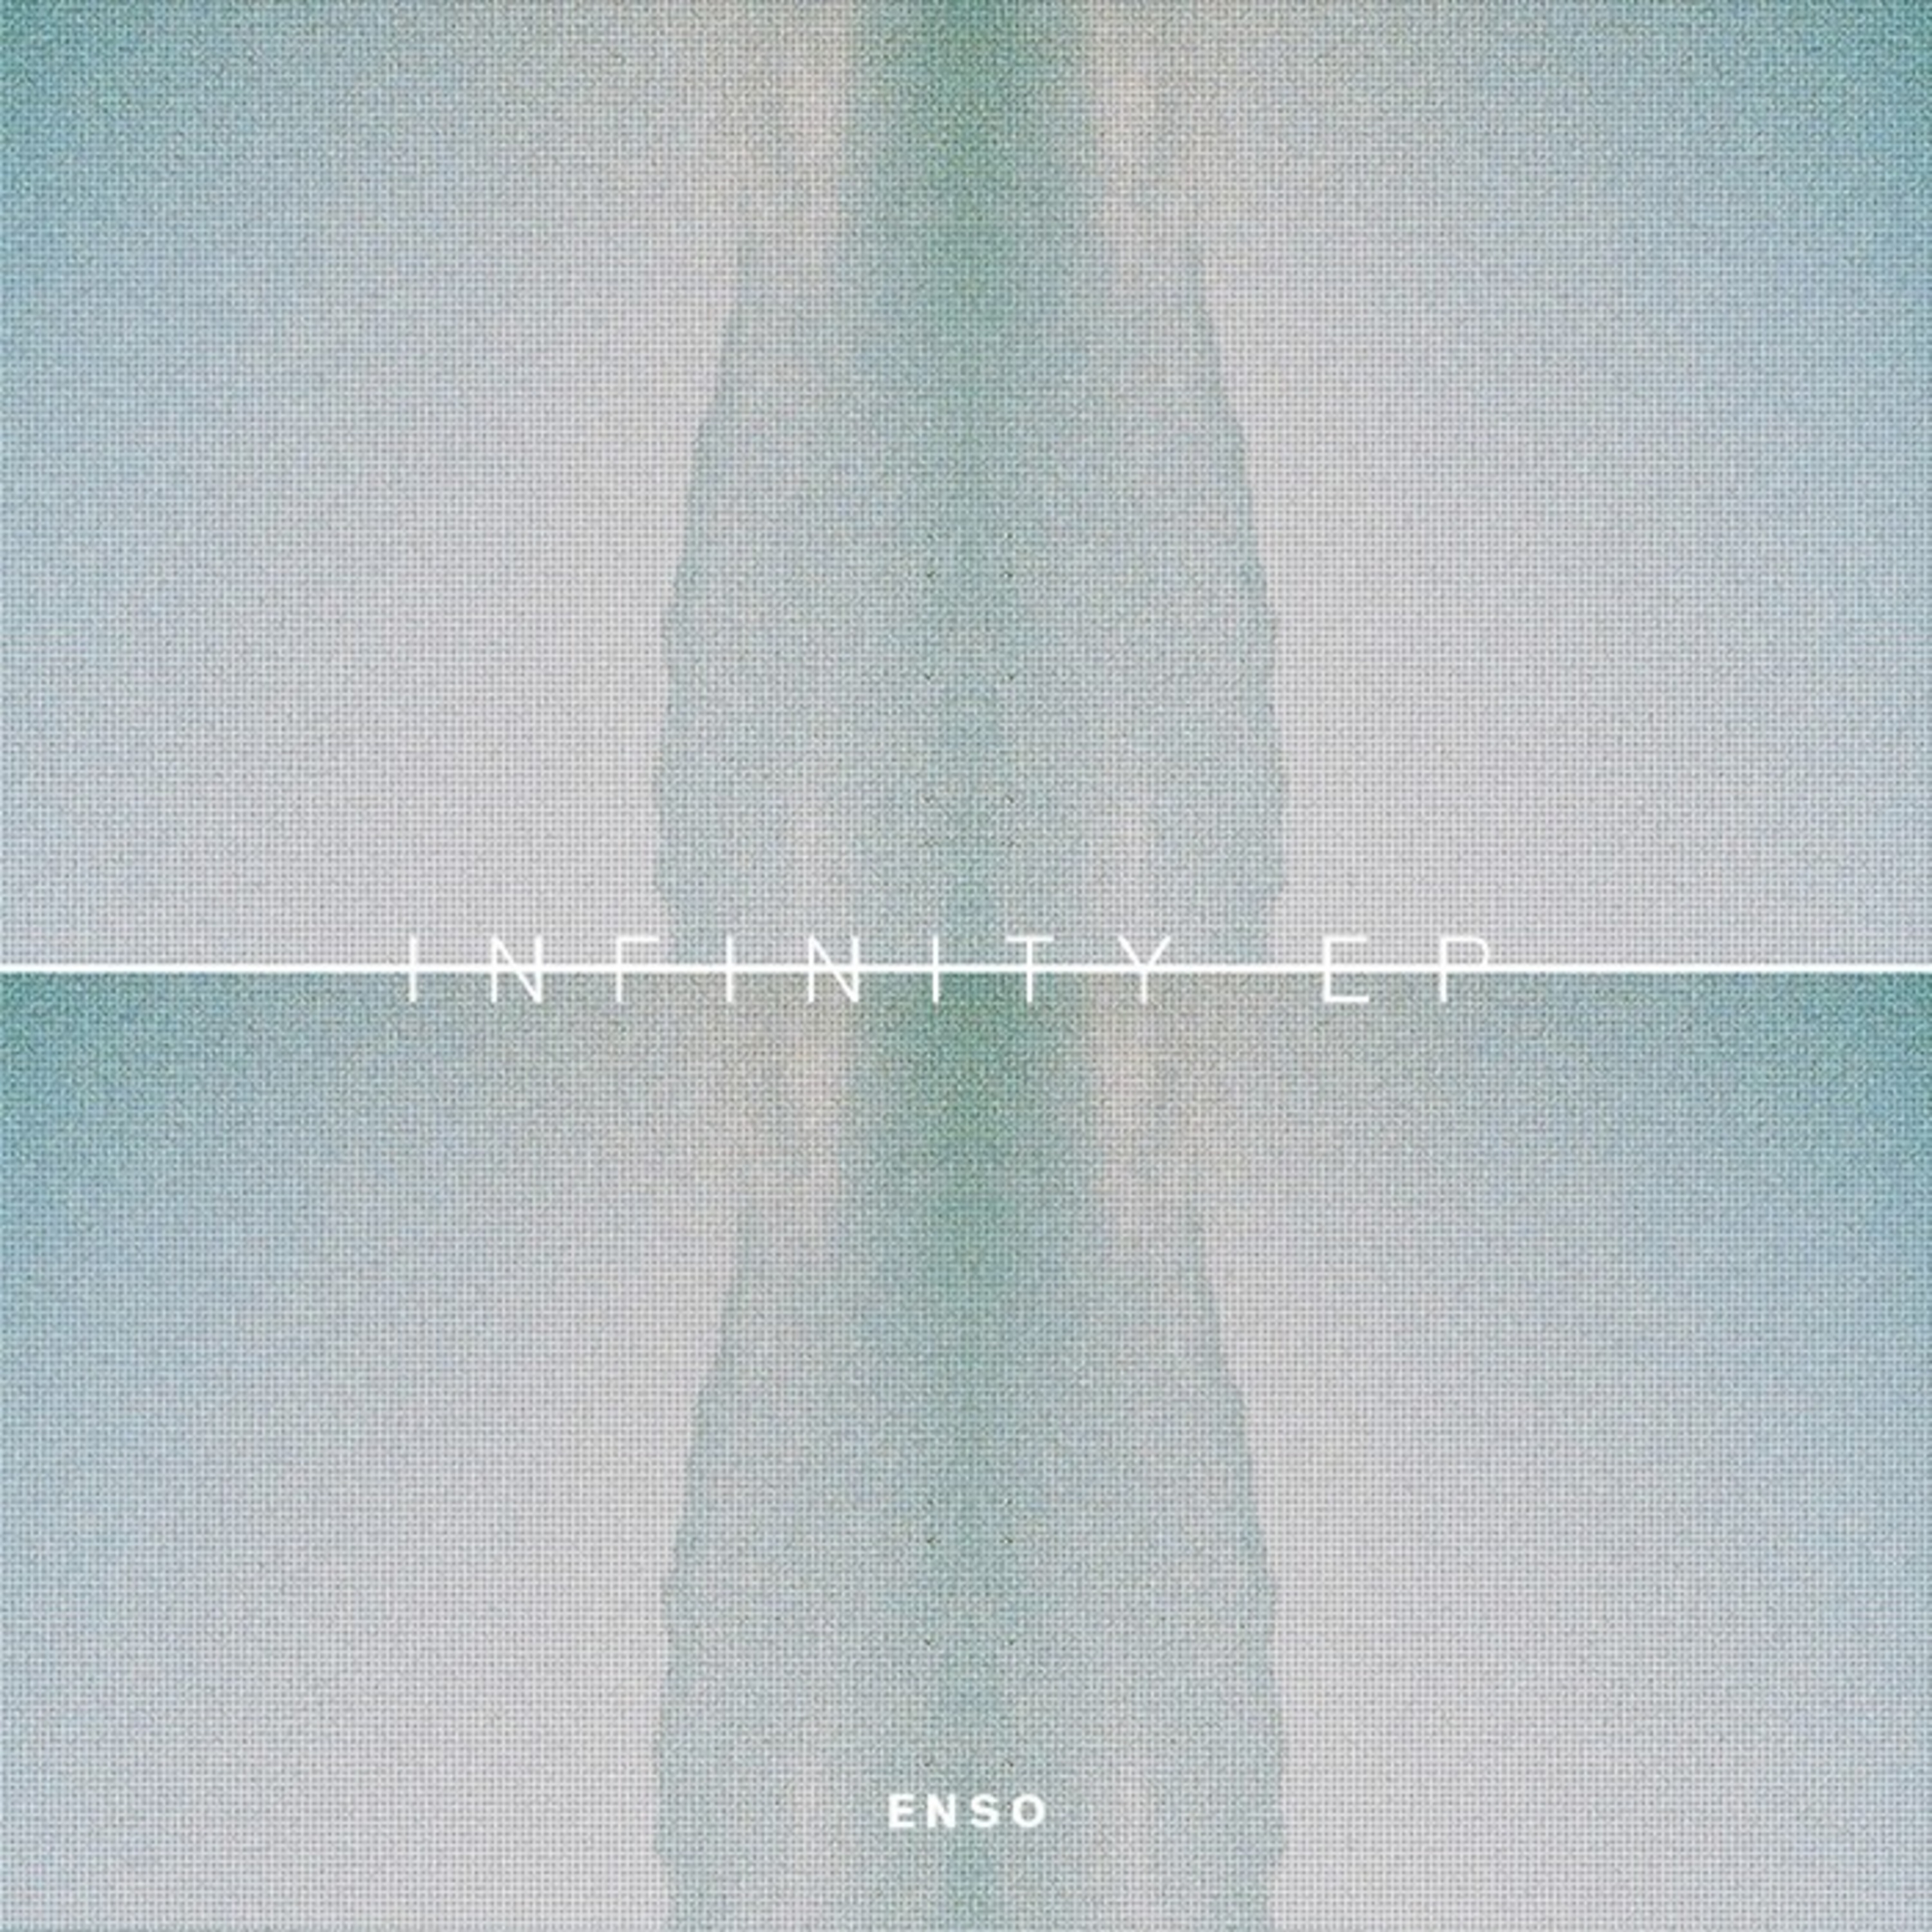 Enso - Symmetry Mix